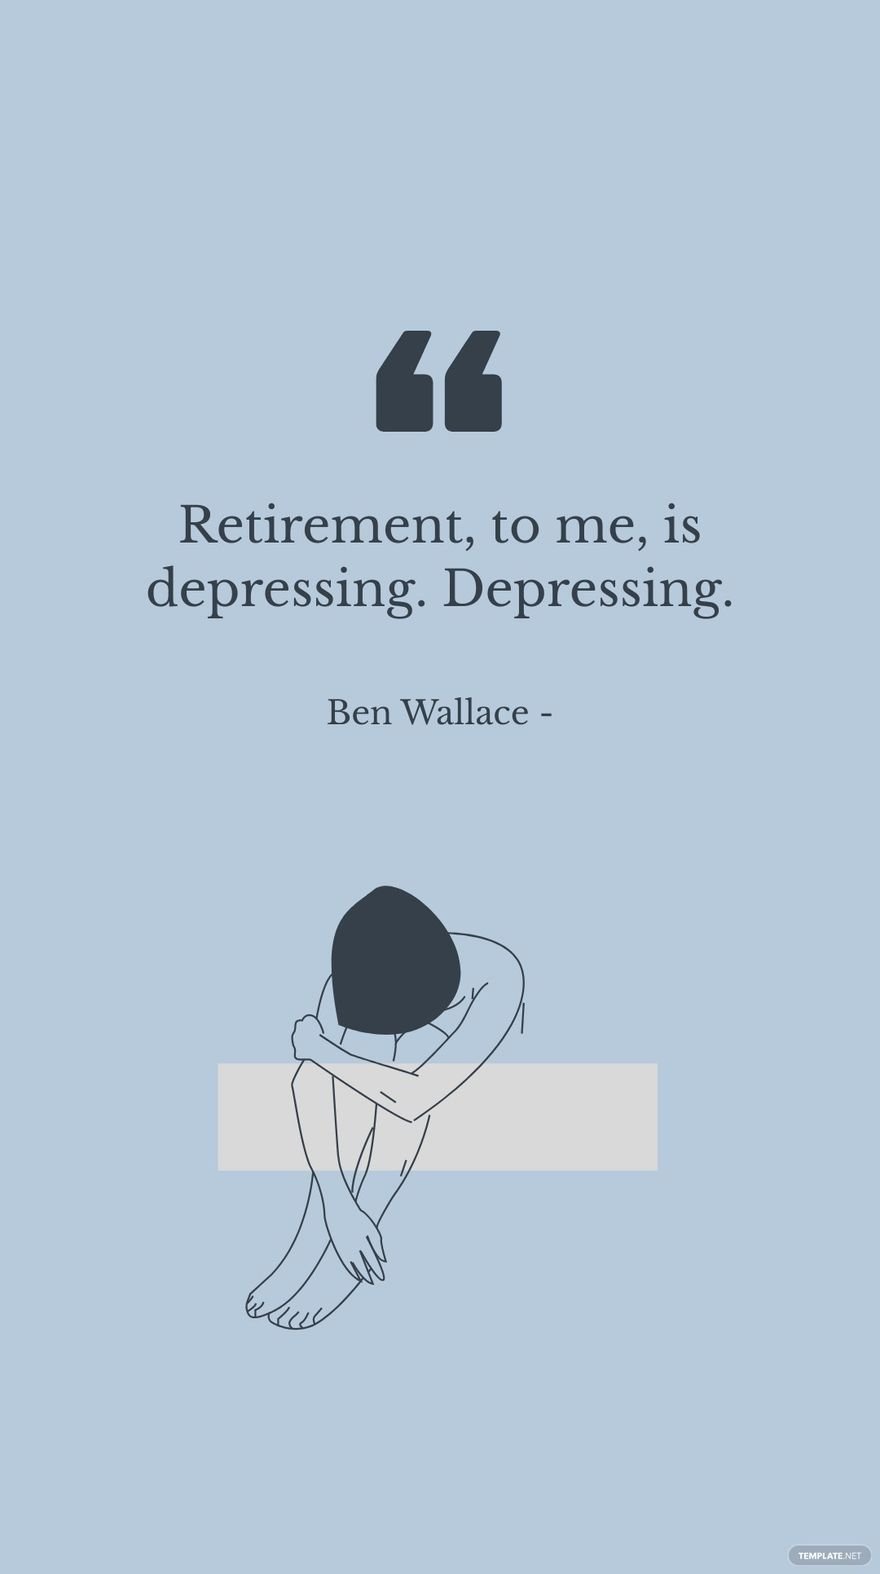 Ben Wallace - Retirement, to me, is depressing. Depressing. in JPG